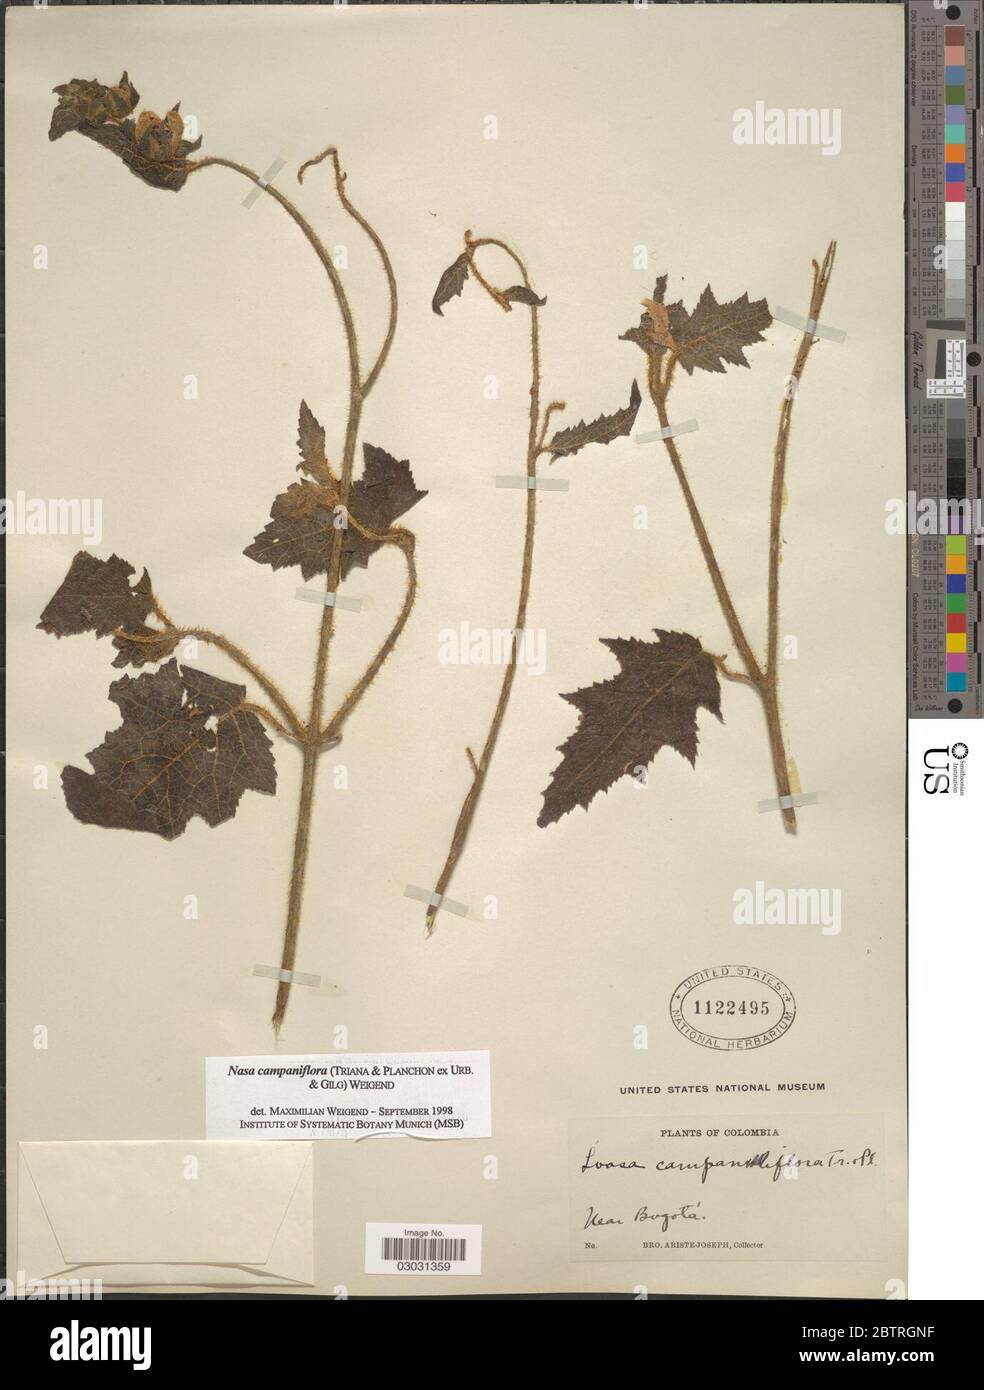 Nasa campaniflora Triana Planch ex Urb Gilg Weigend. Stock Photo